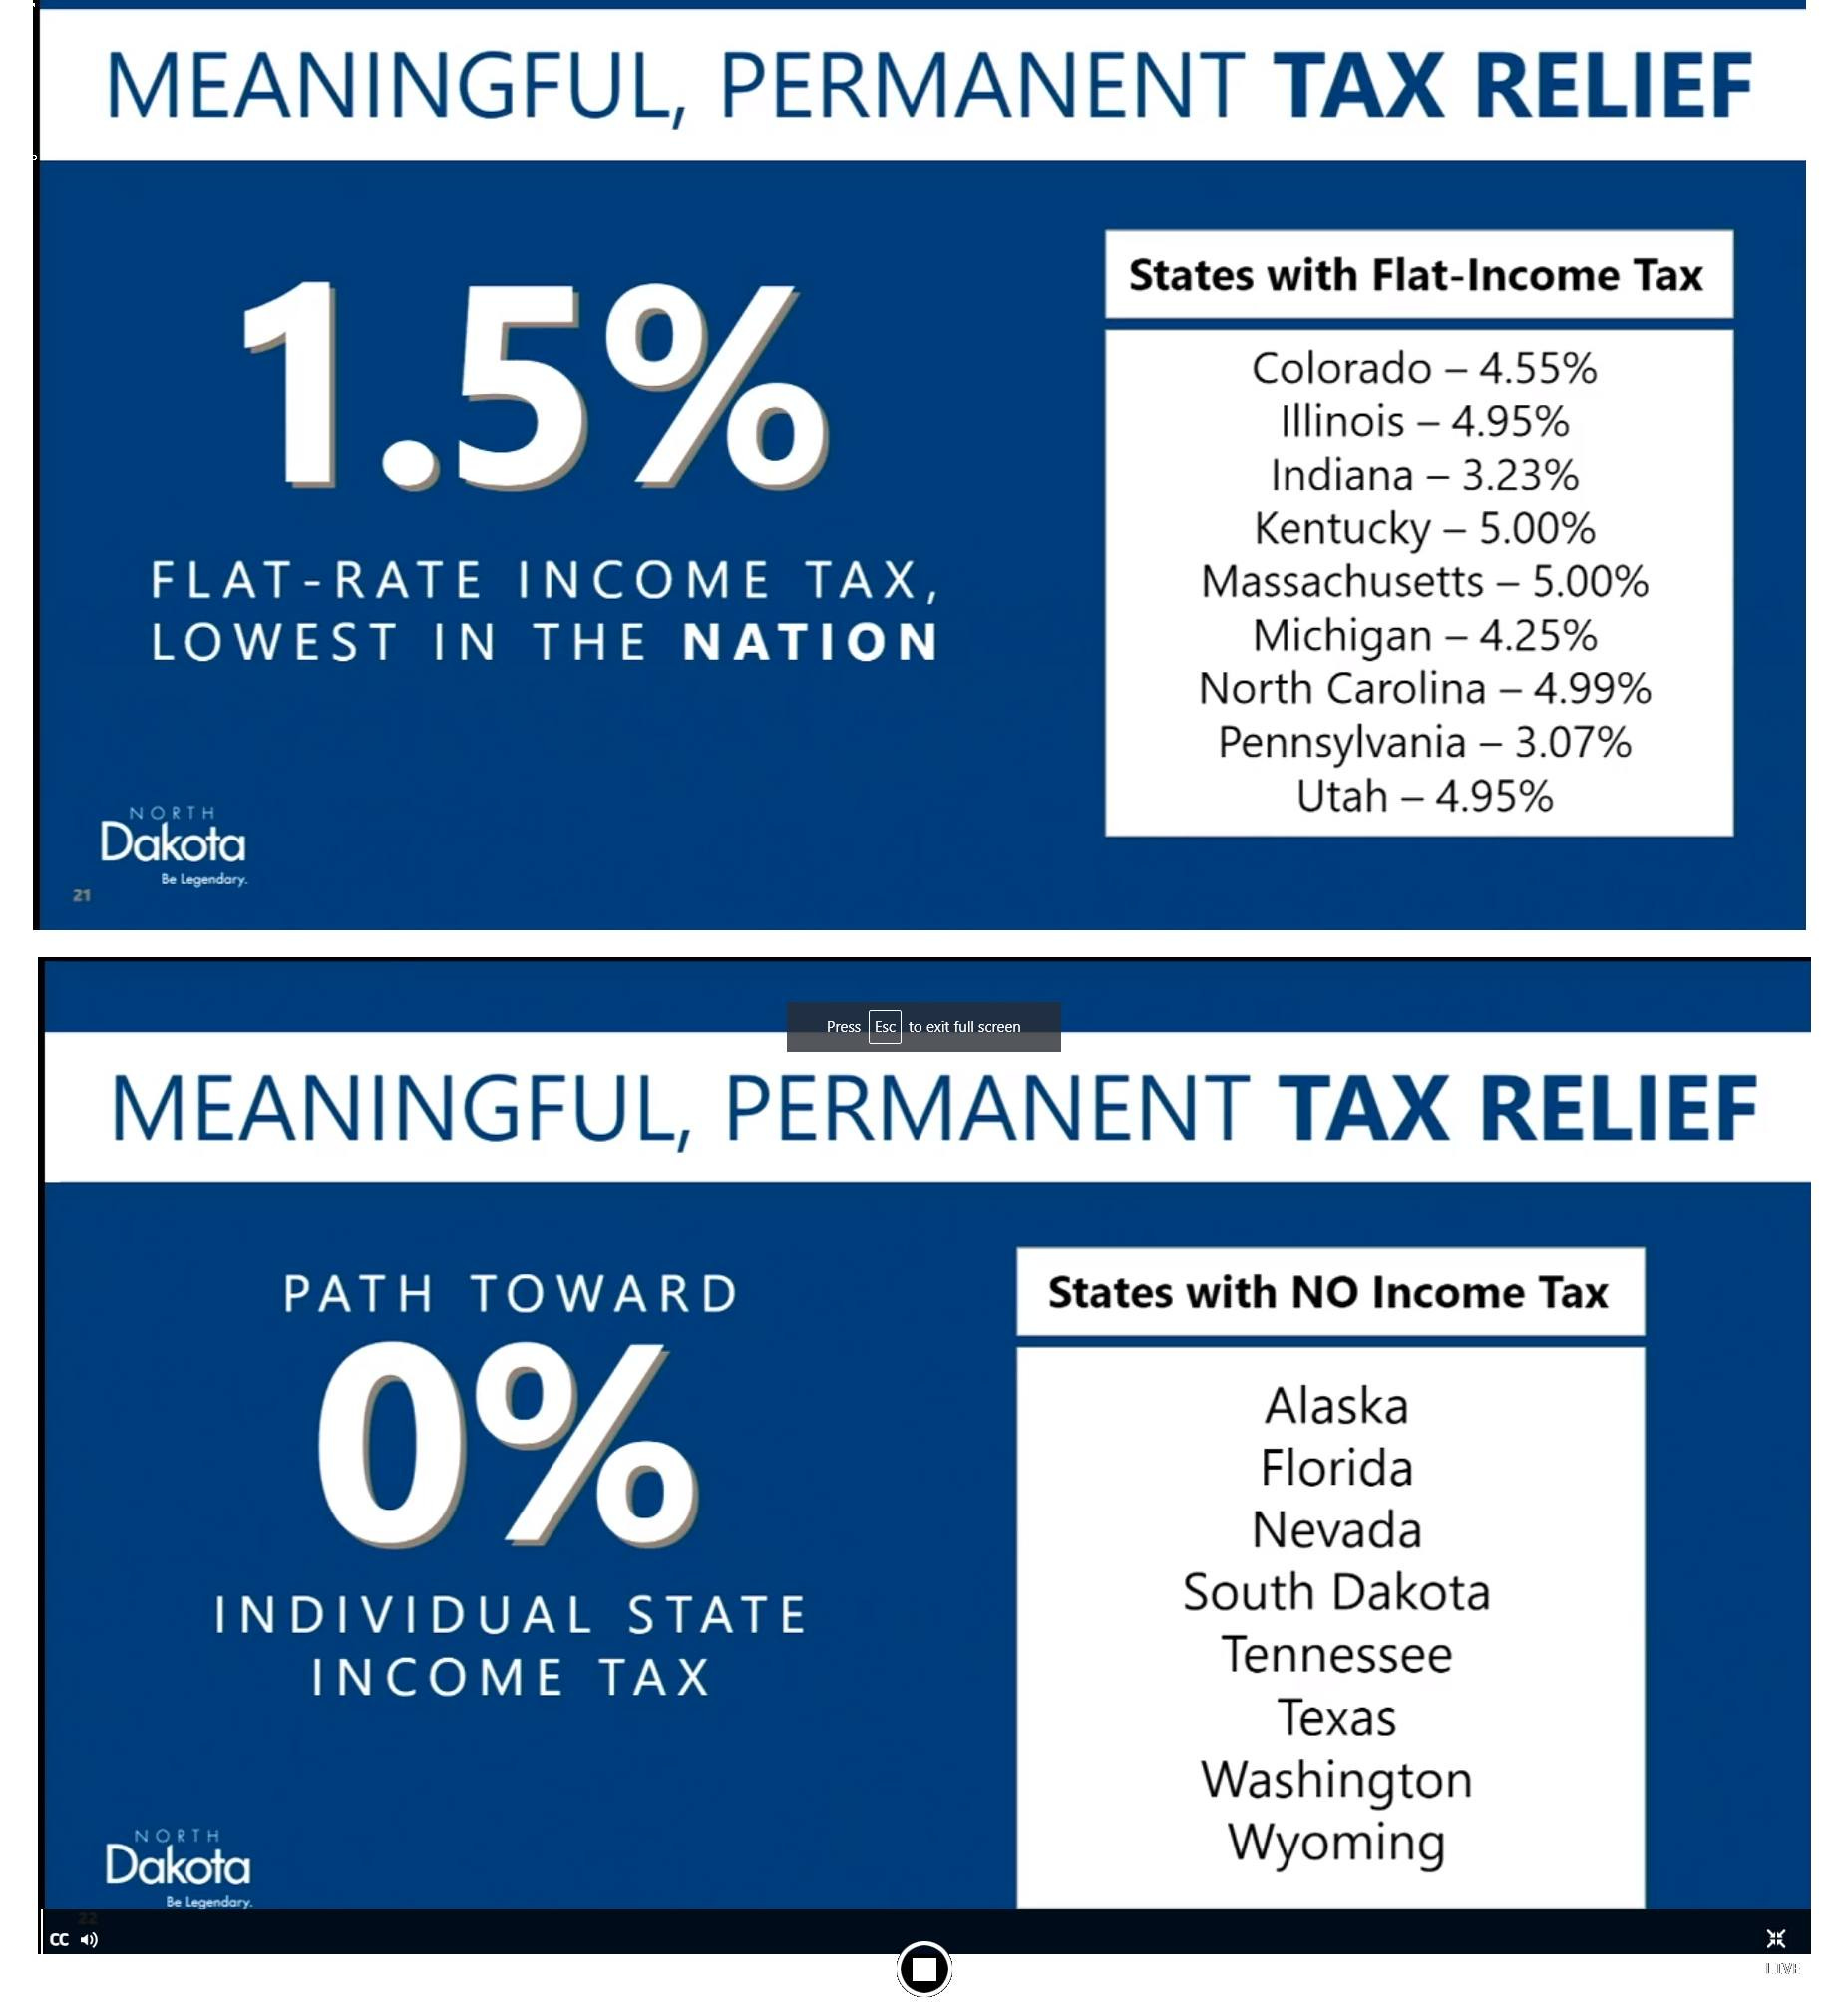 May be an image of text that says 'MEANINGFUL, PERMANENT TAX RELIEF States with Flat-Income Tax 1.5% FLAT-RATE INCOME TAX, LOWEST IN THE NATION Colorado -4.55% Illinois 4.95% Indiana- Kentucky- -5.00% Massachusetts -5.00% Michigan 4.25% North Carolina -4.99% Pennsylvania- 3.07% Utah-4.95% Utah Dakota MEANINGFUL, PERMANENT TAX RELIEF States with NO Income Tax PATH TOWARD 0% INDIVIDUAL STATE INCOME TAX Alaska Florida Nevada South Dakota Tennessee Texas Washington Wyoming Dakota'